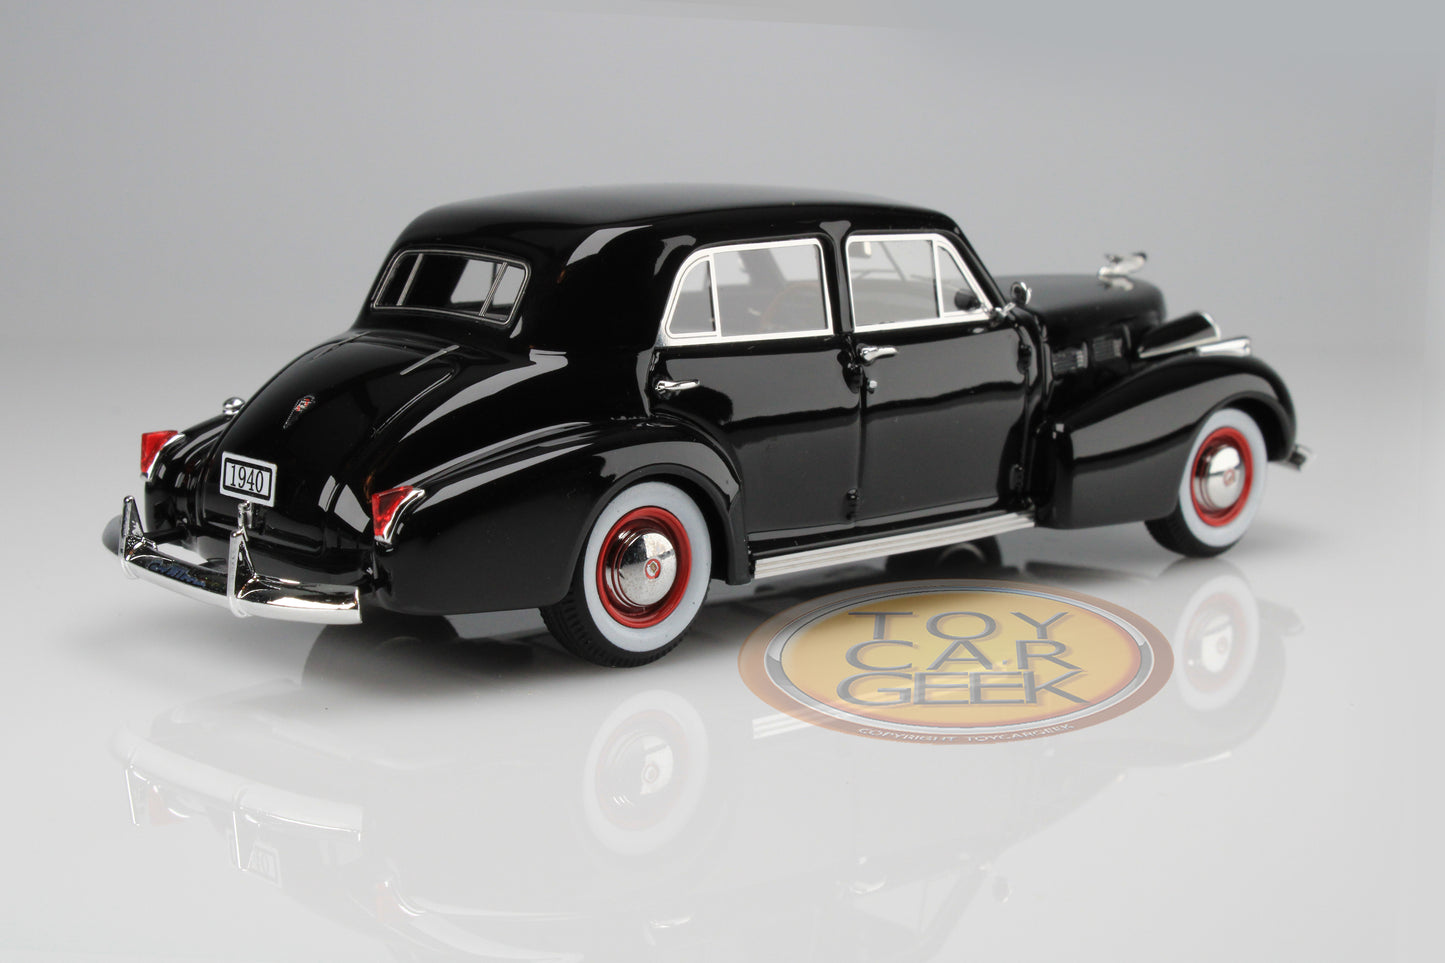 1940 Cadillac Fleetwood Sixty Special